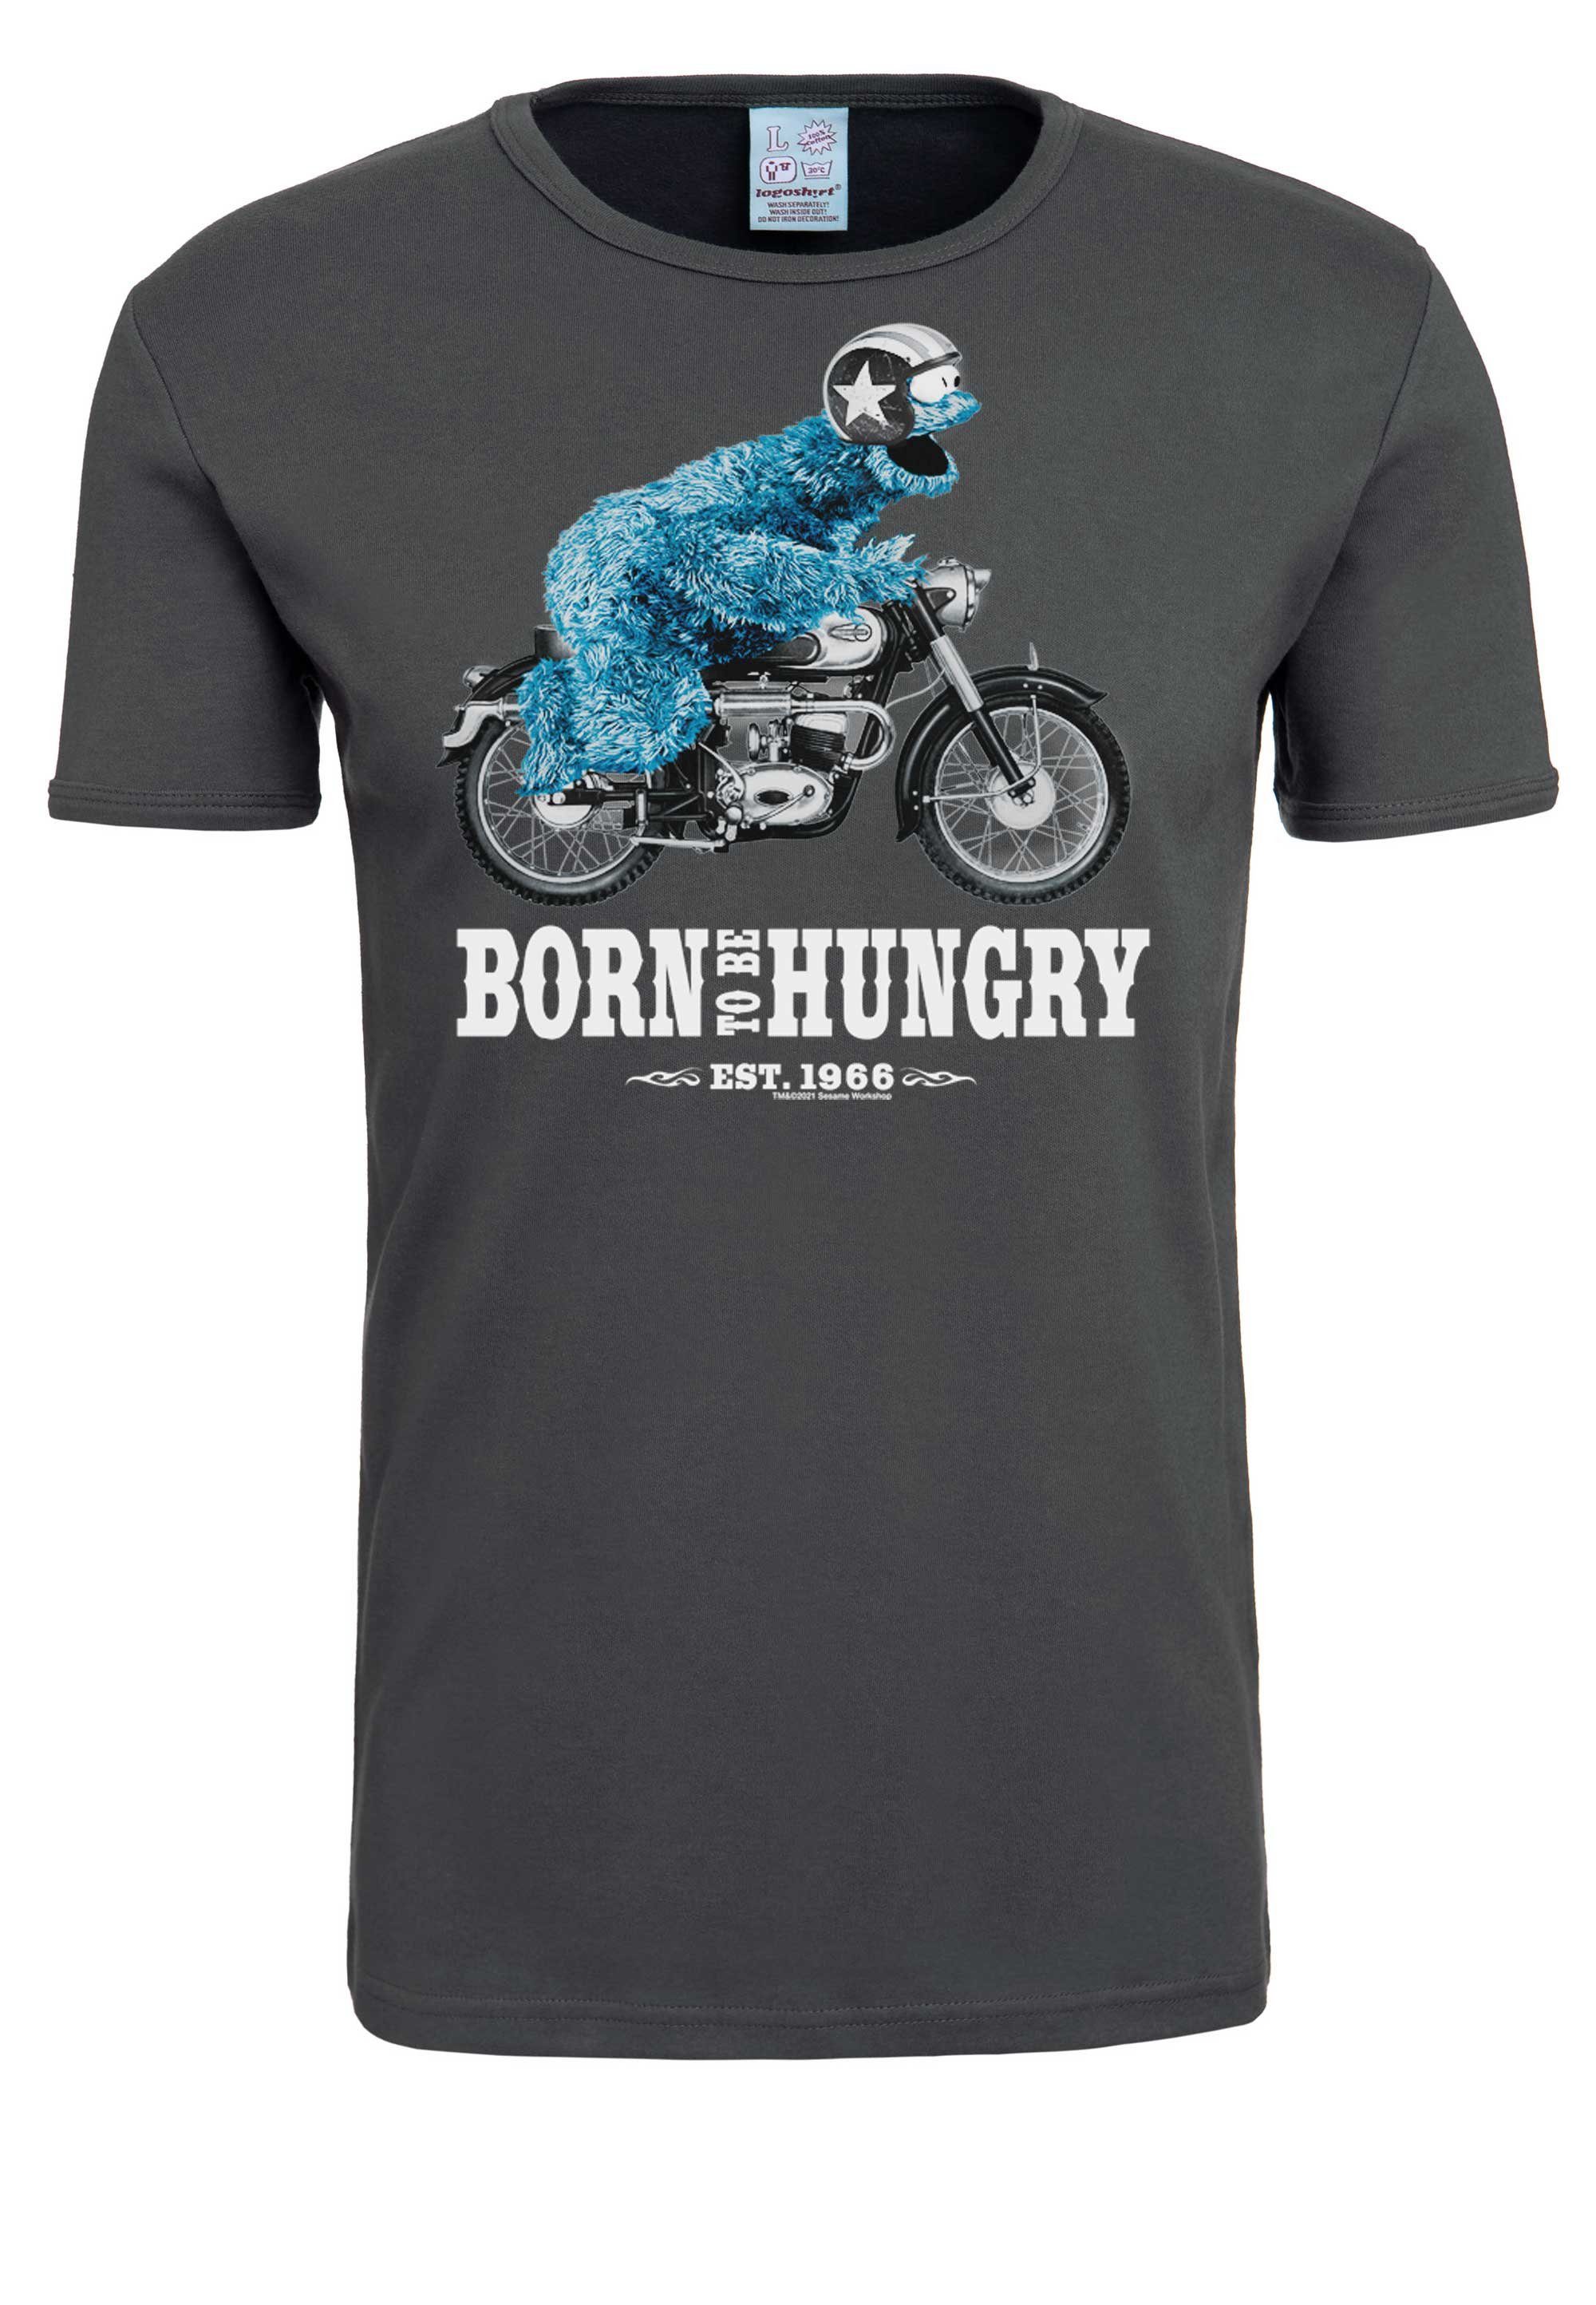 LOGOSHIRT Motorrad - mit Krümelmonster T-Shirt dunkelgrau Sesamstraße Print lizenziertem